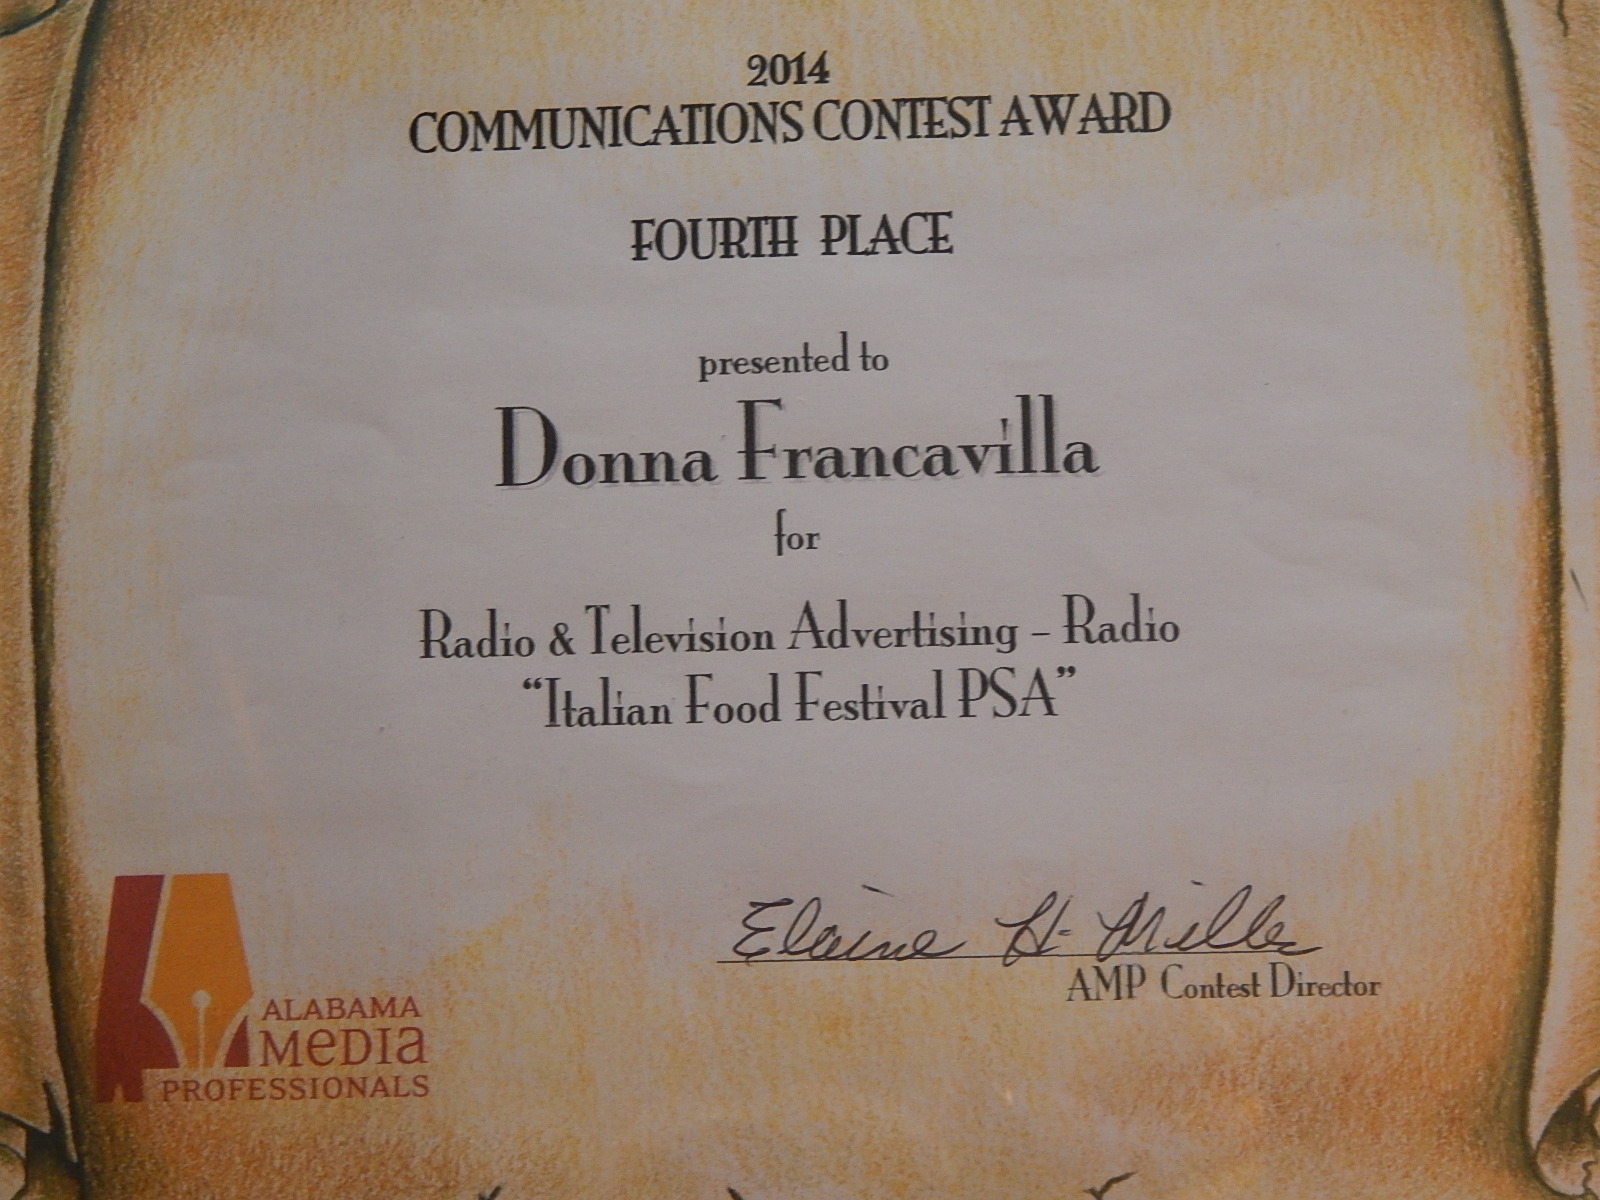 2014 Alabama Media Professionals Communications Contest Award – State Award – Fourth Place presented to Donna Francavilla for Radio & Television Advertising – Radio “Italian Food Festival PSA”